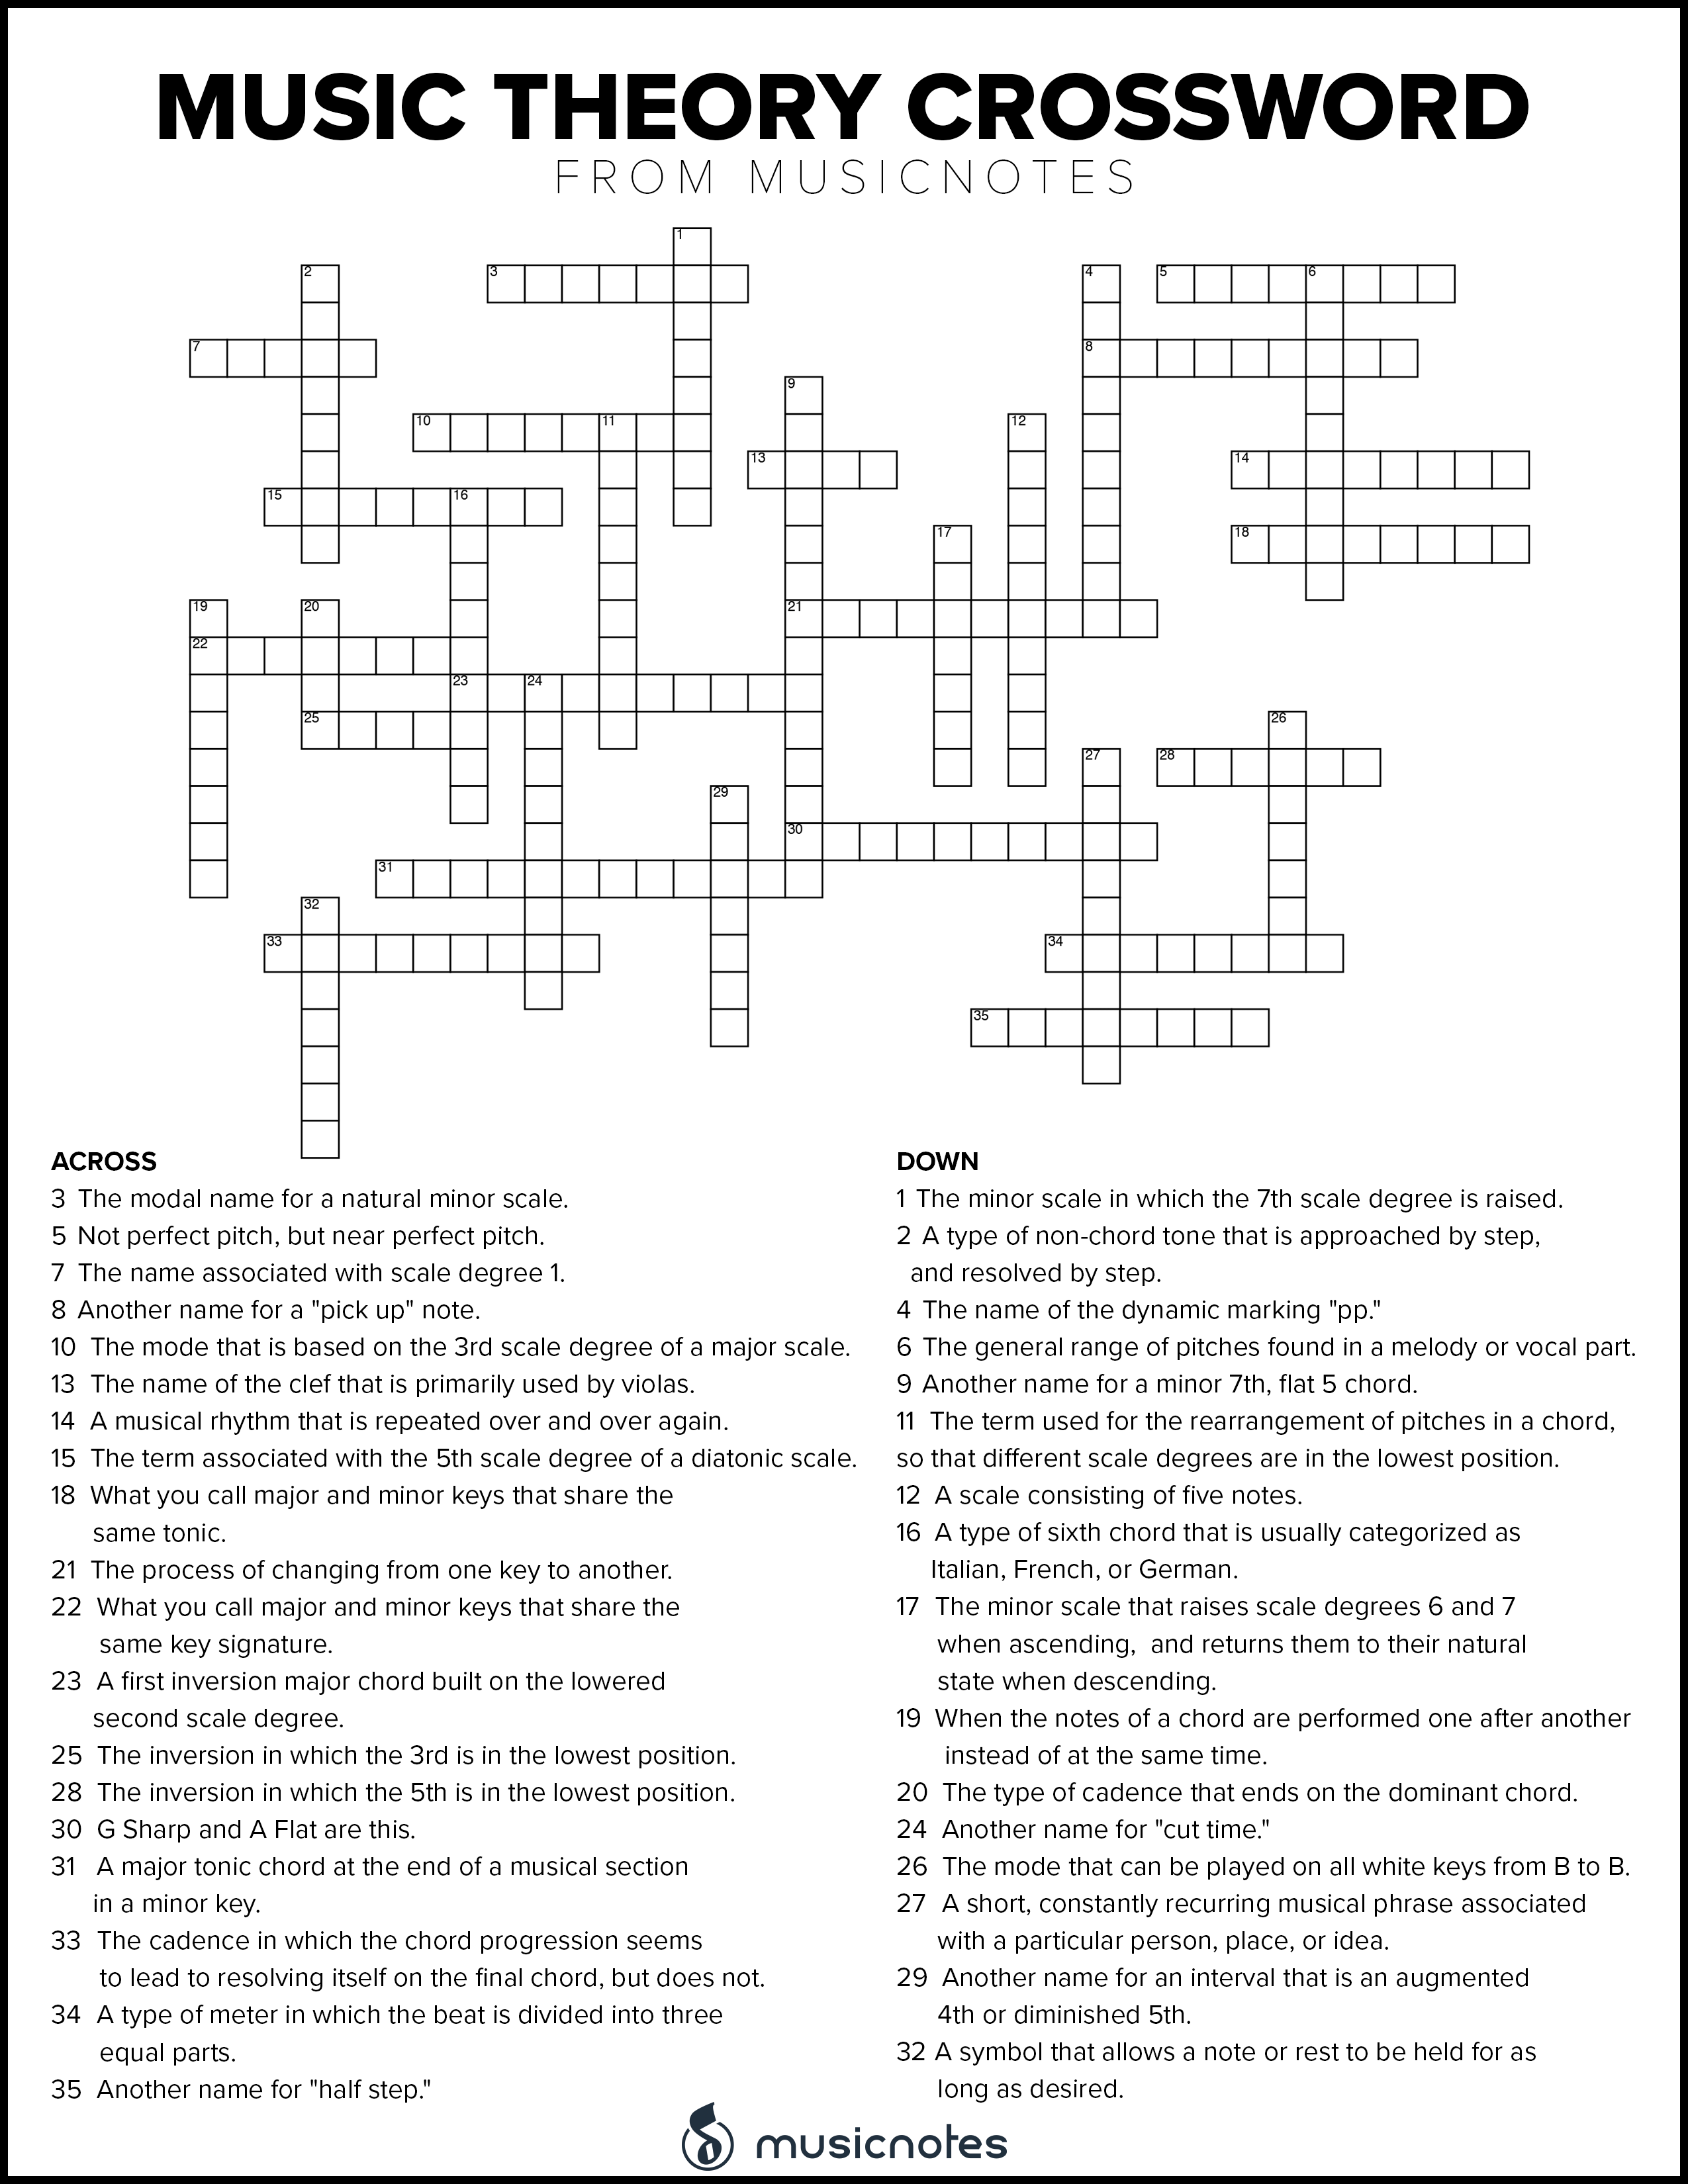 Justin Bieber Crossword Puzzle Printable